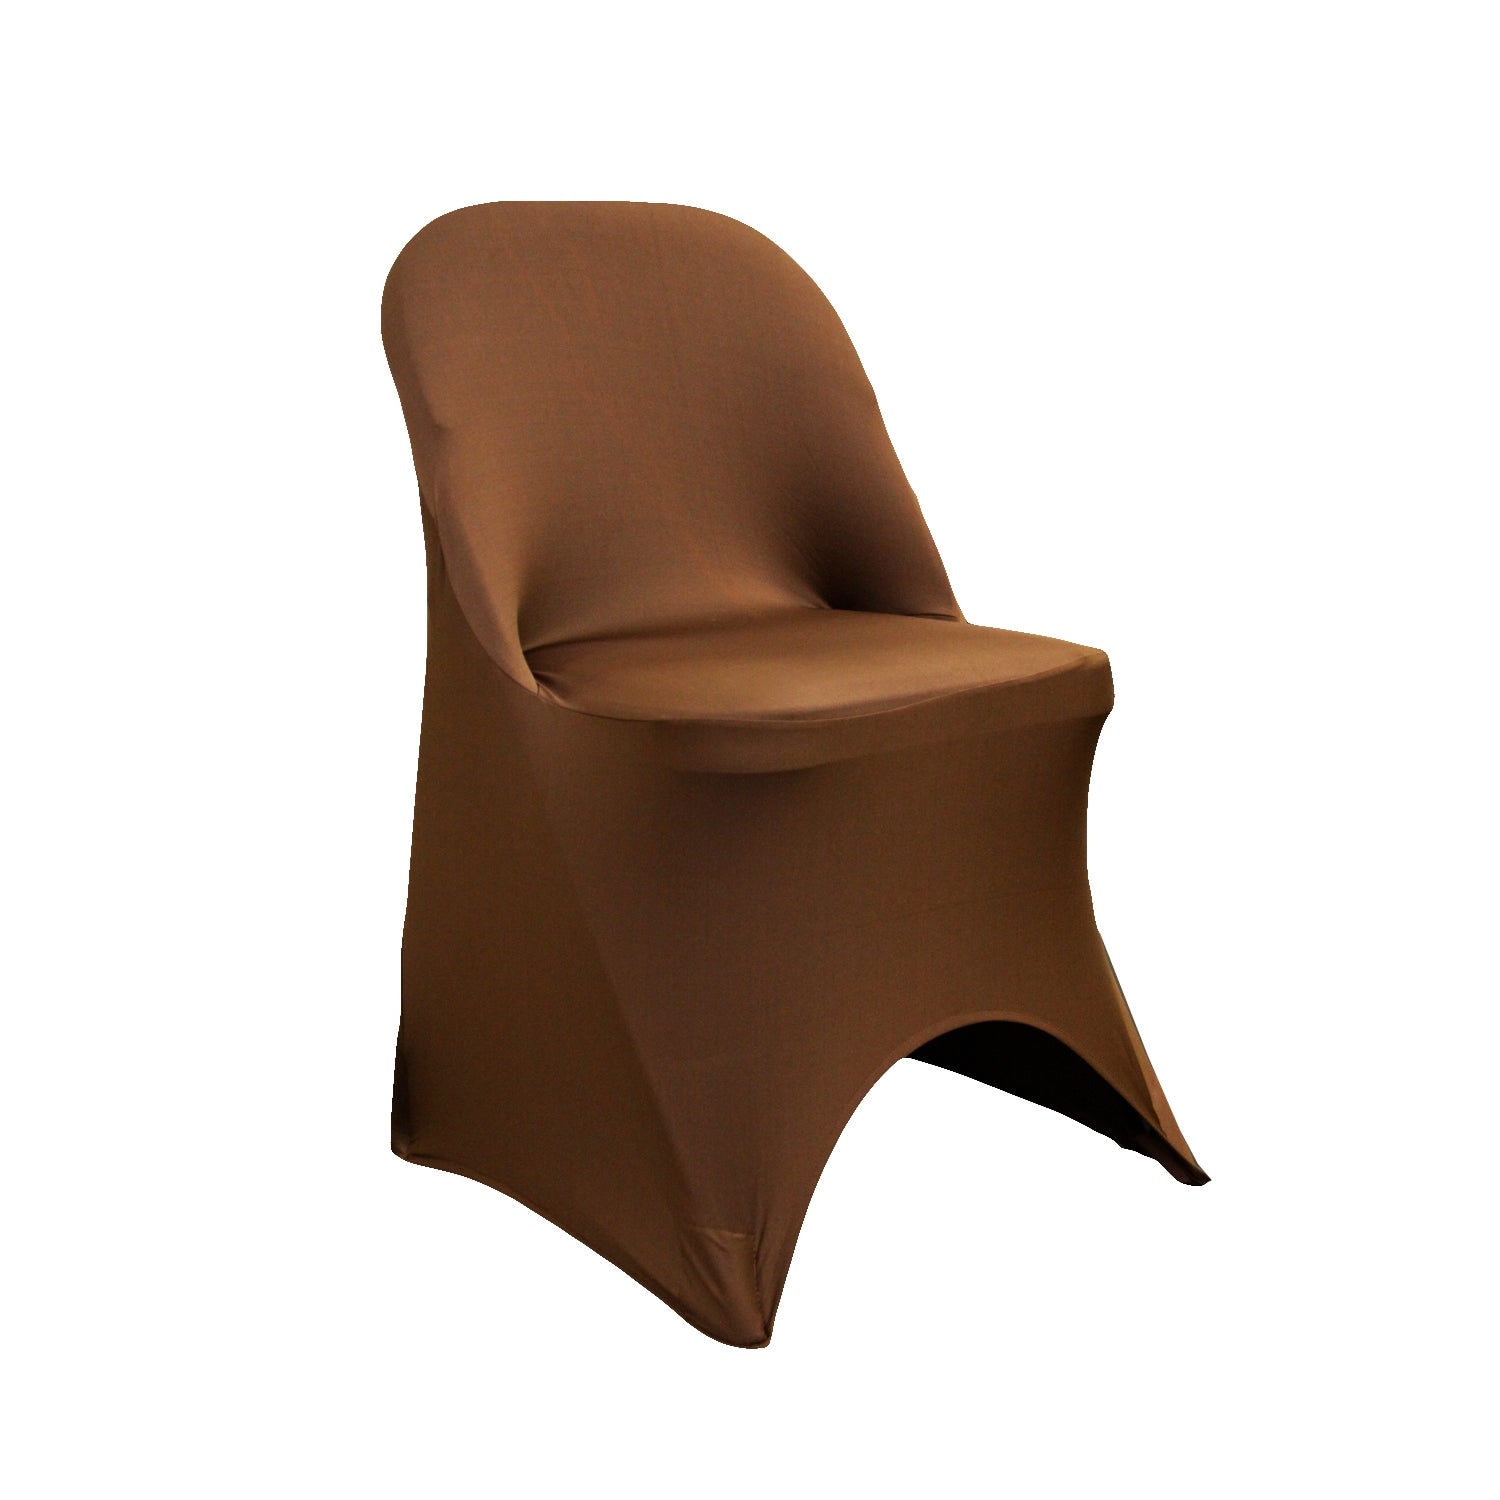 Folding Spandex Chair Cover - Chocolate Brown - CV Linens